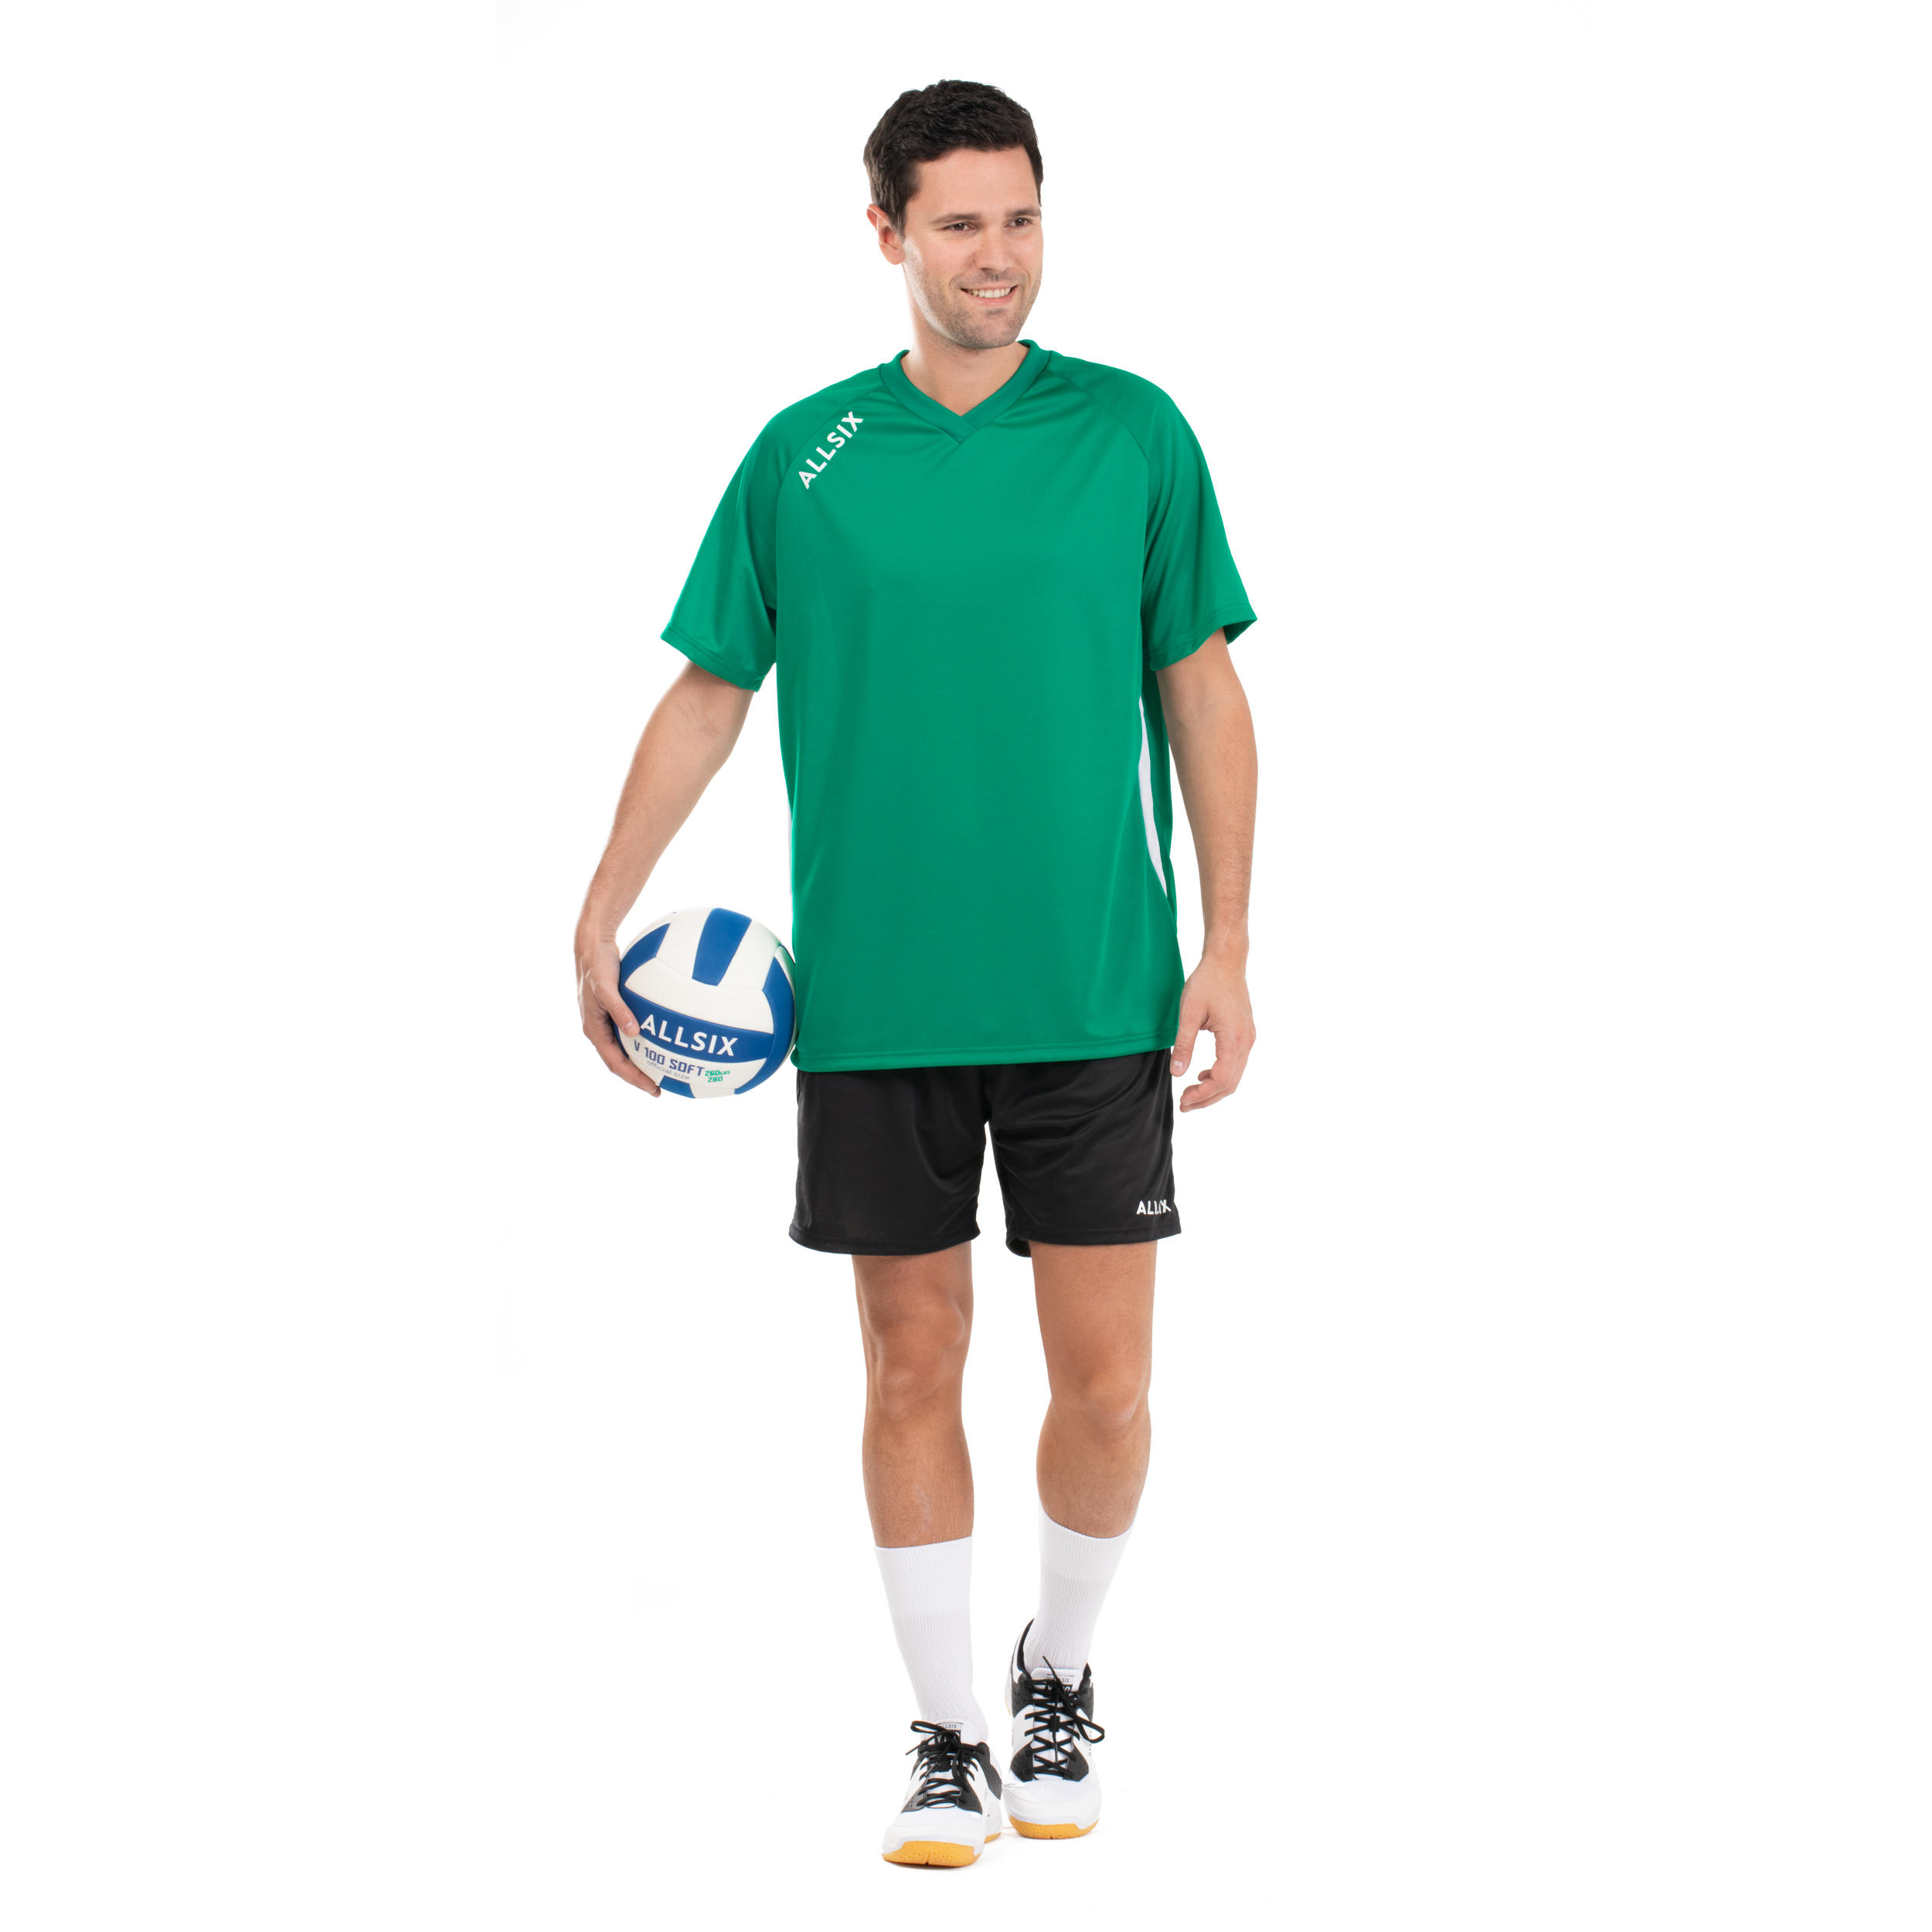 V100 Volleyball Jersey - Green 7/7